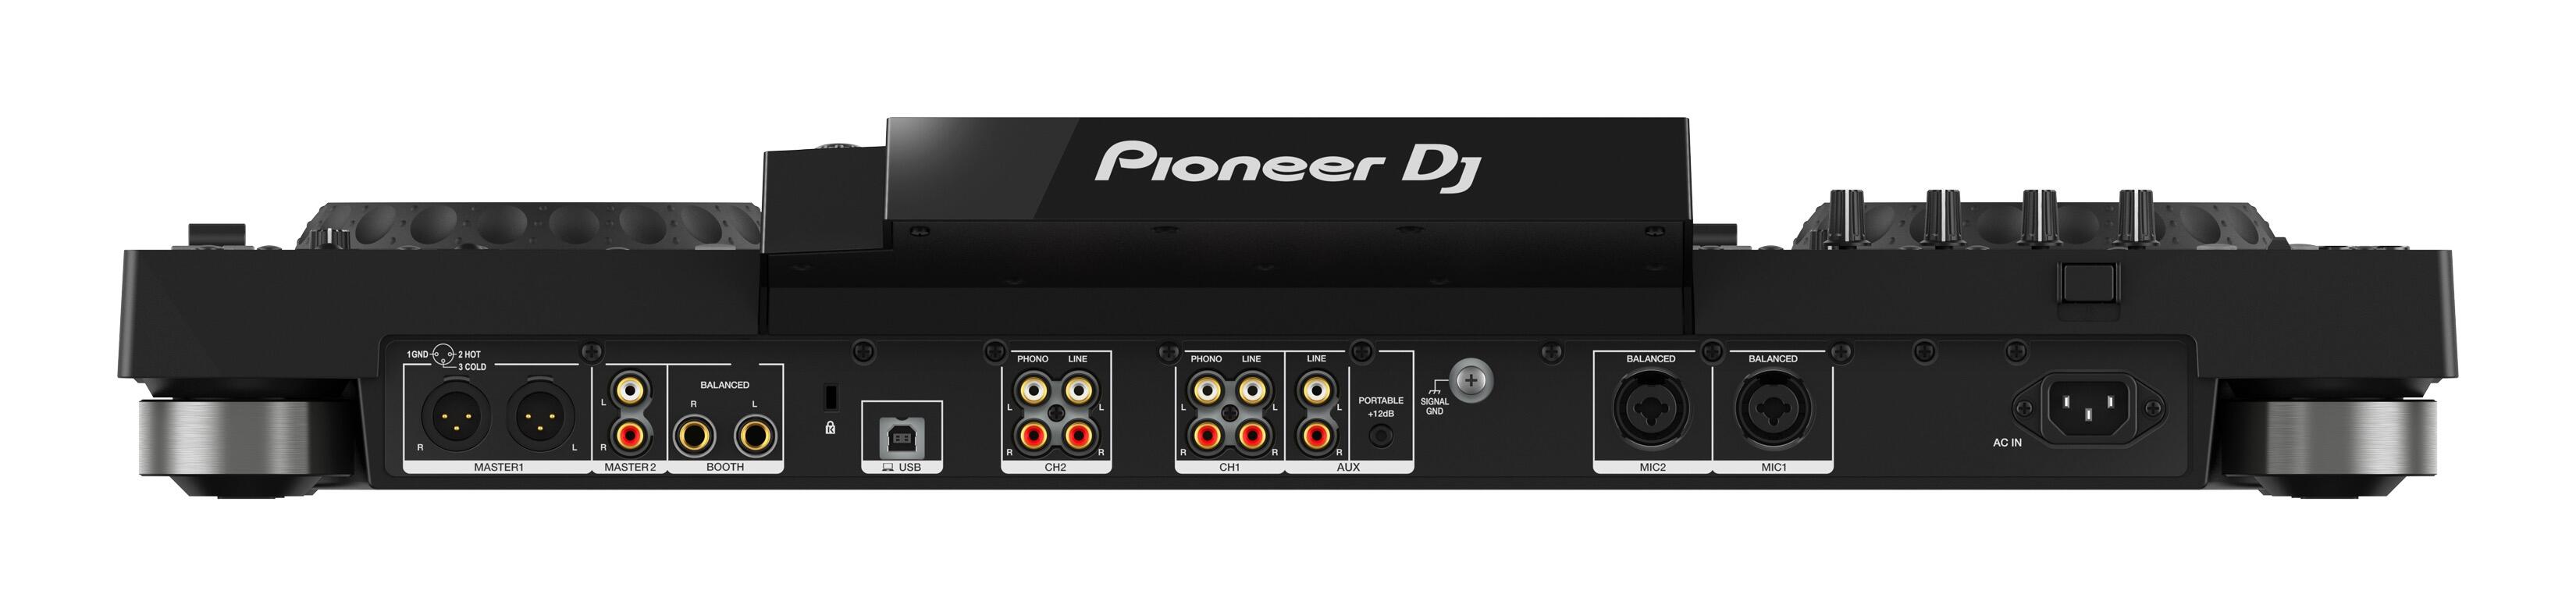 Pioneer DJ XDJ-RX3 rear